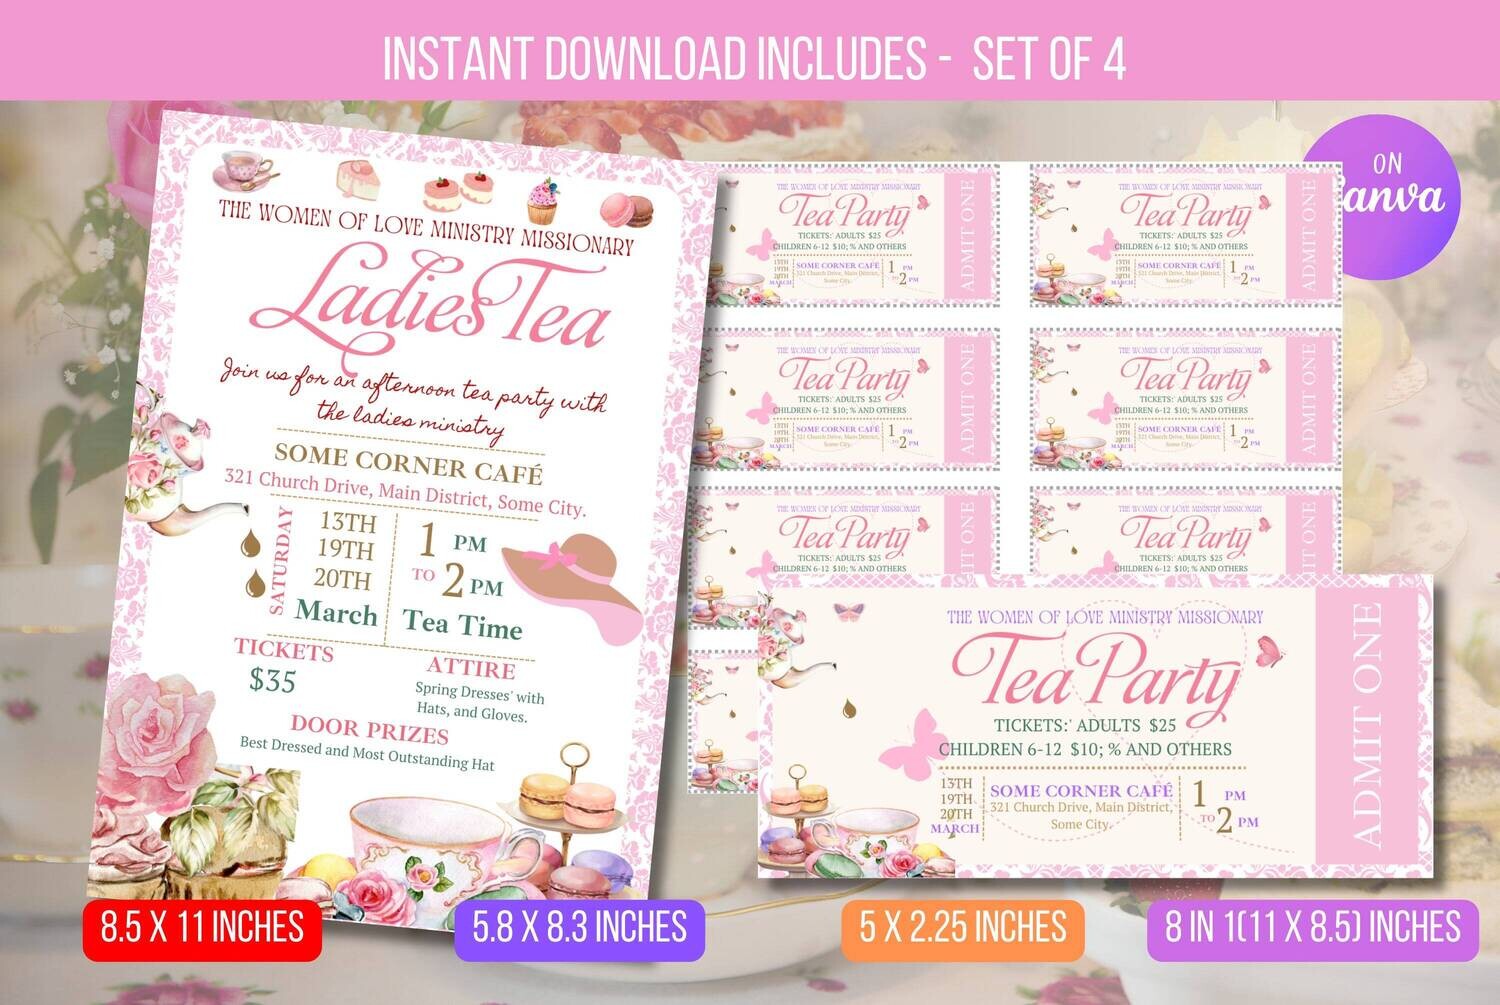 EDIATBLE Ladies Tea Party Event Flyer, Par-tea Invite Template, Brunch Women&#39;s Ministry High Tea Coffee Teacup Mother&#39;s Day Instant Download